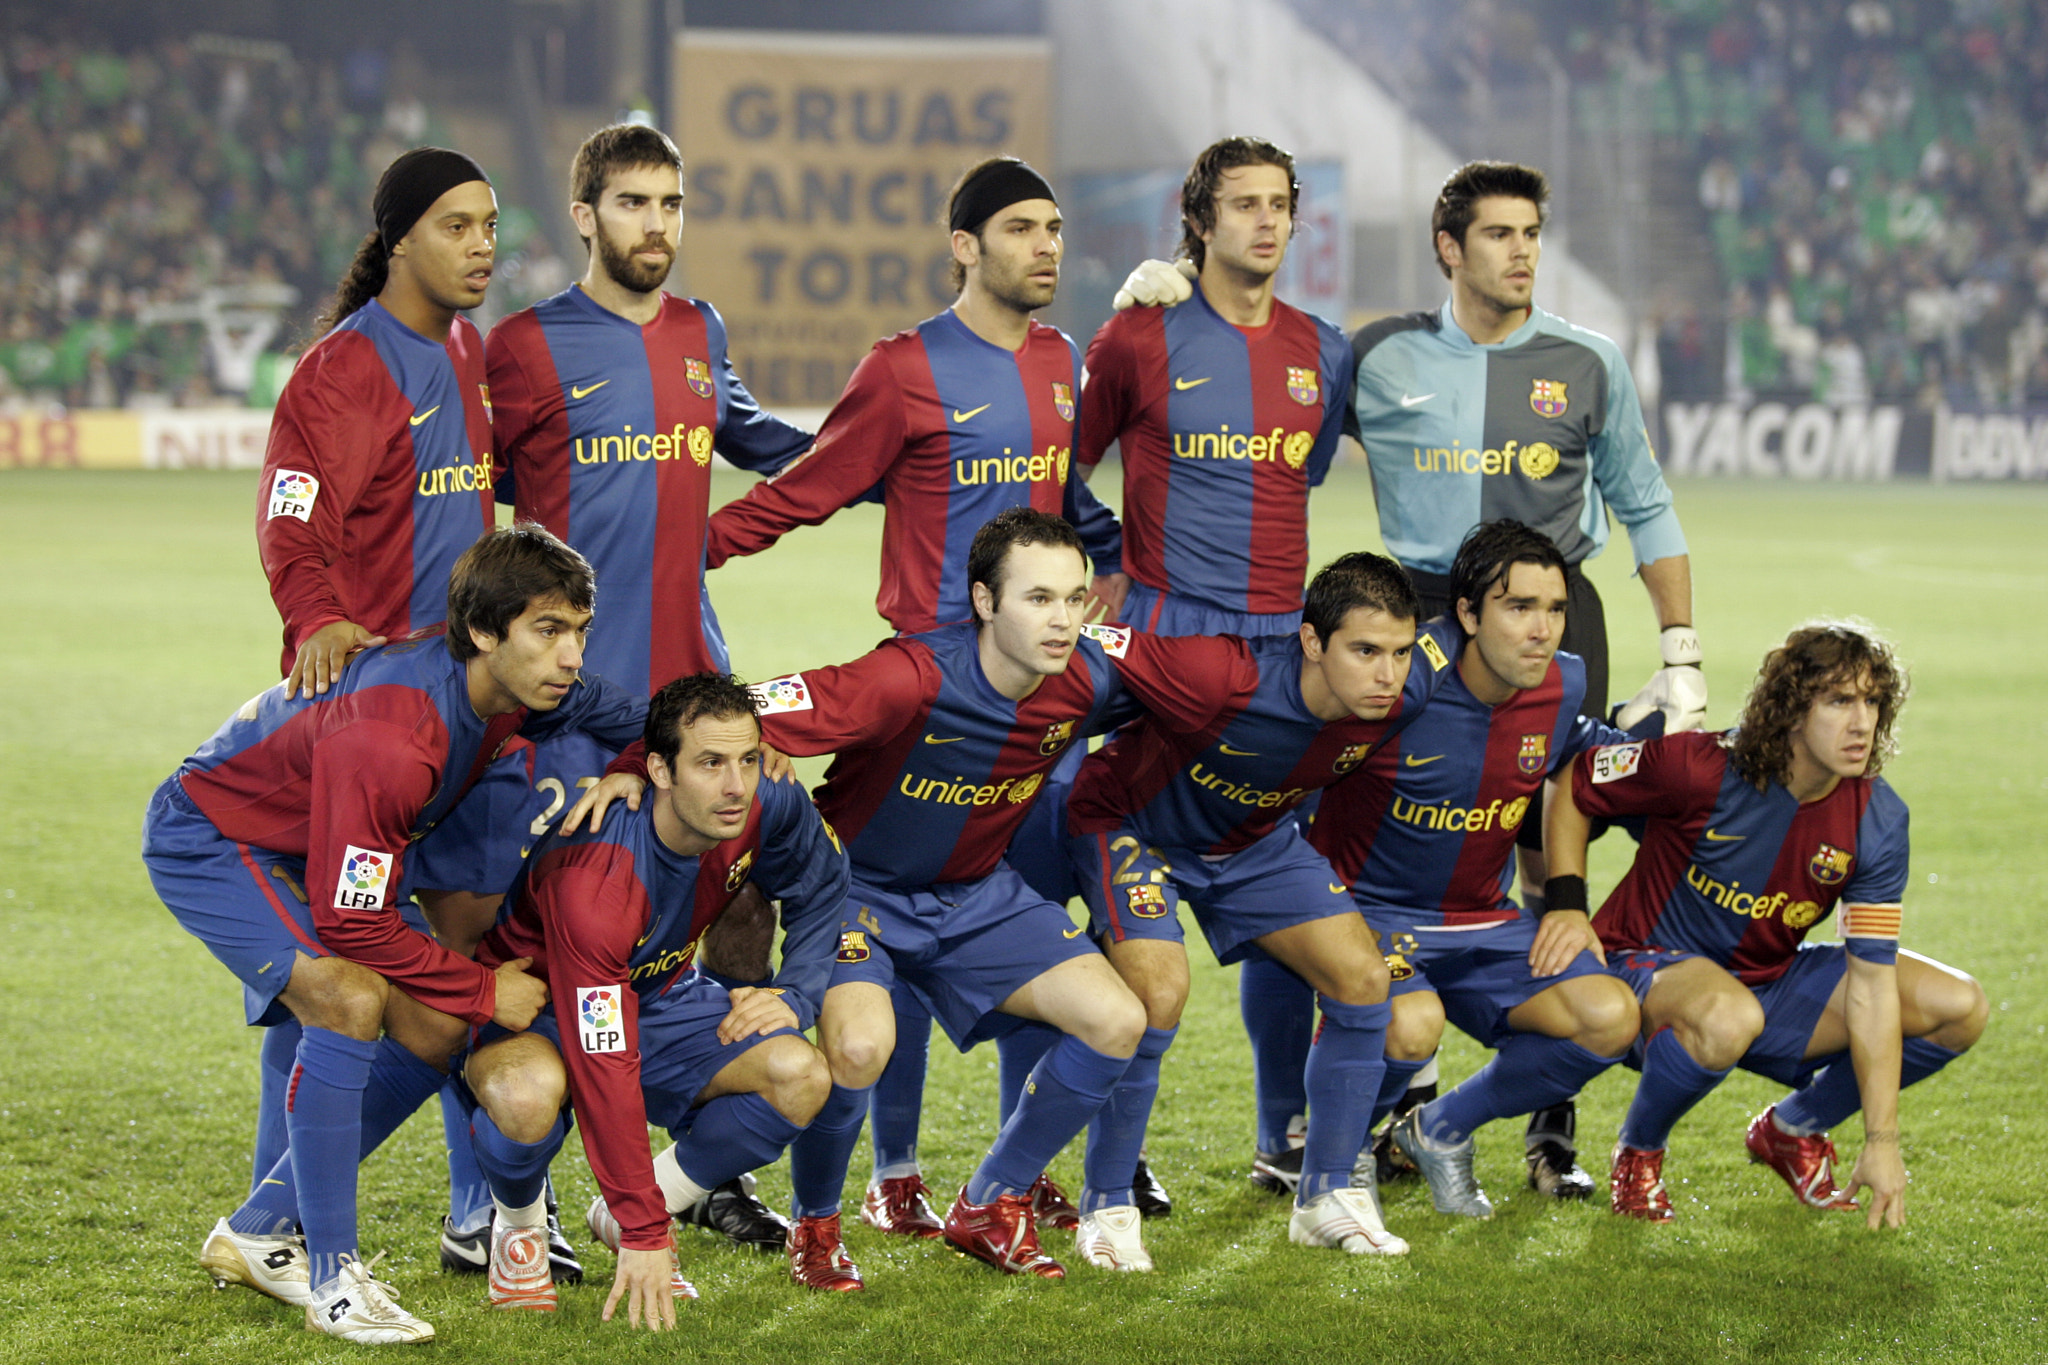 FC Barcelona squad. Taken at Ruiz de Lopera stadium (Seville, Spain), during the Spanish Liga game b